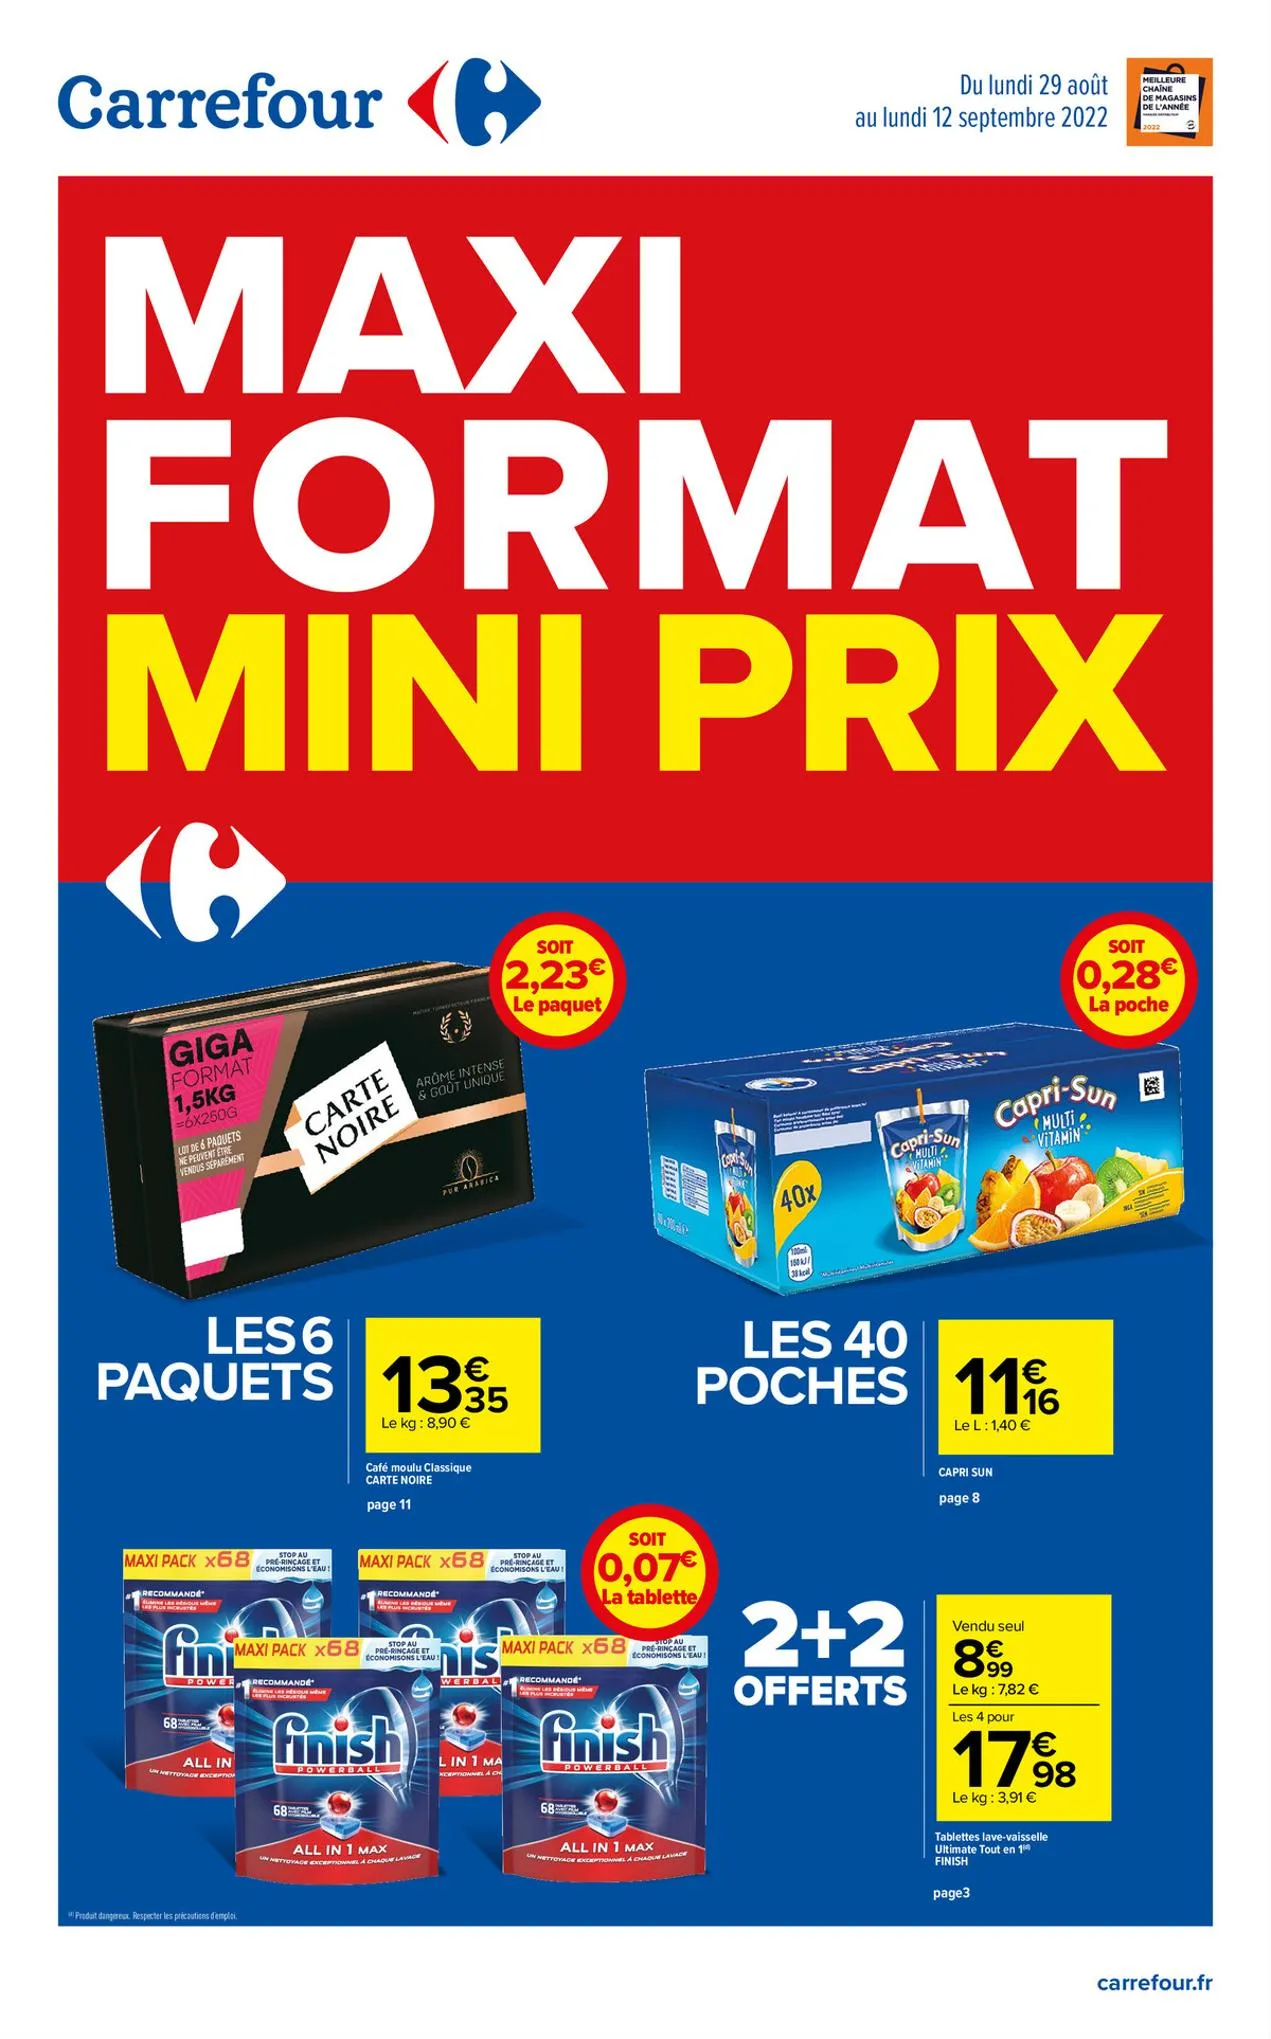 Catalogue Maxi Format, Mini Prix, page 00001